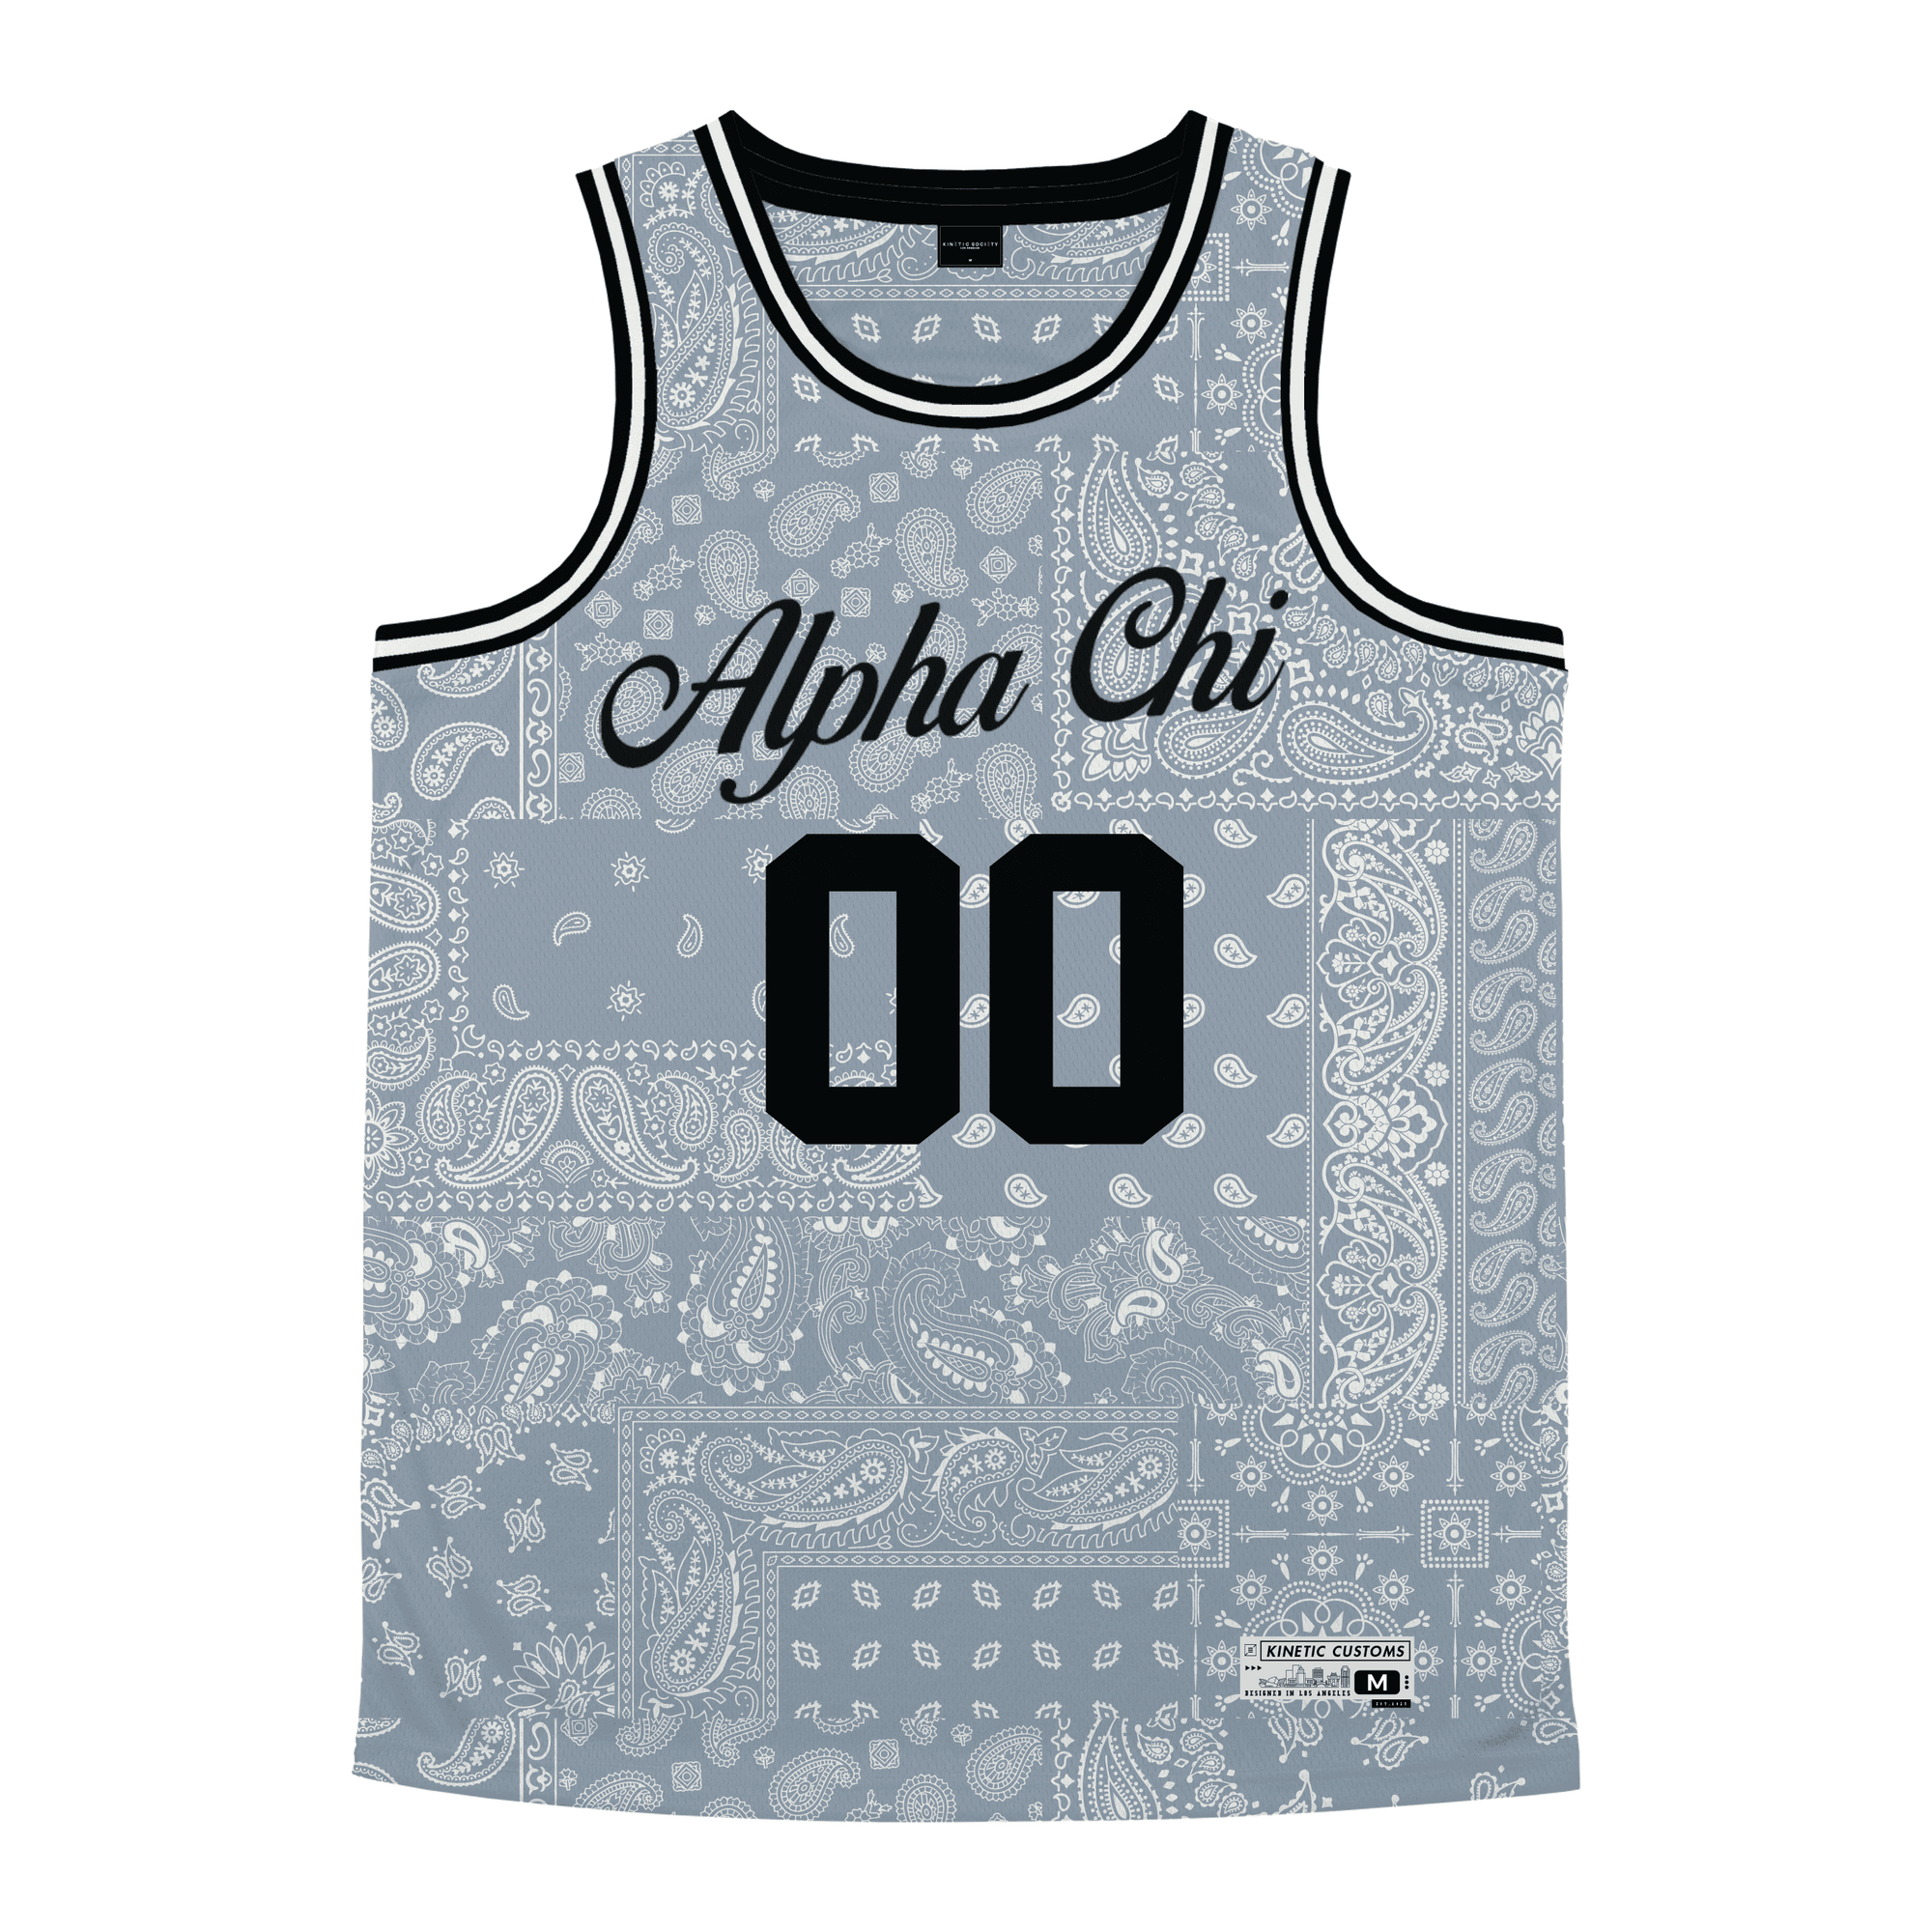 Alpha Chi Omega - Slate Bandana - Basketball Jersey